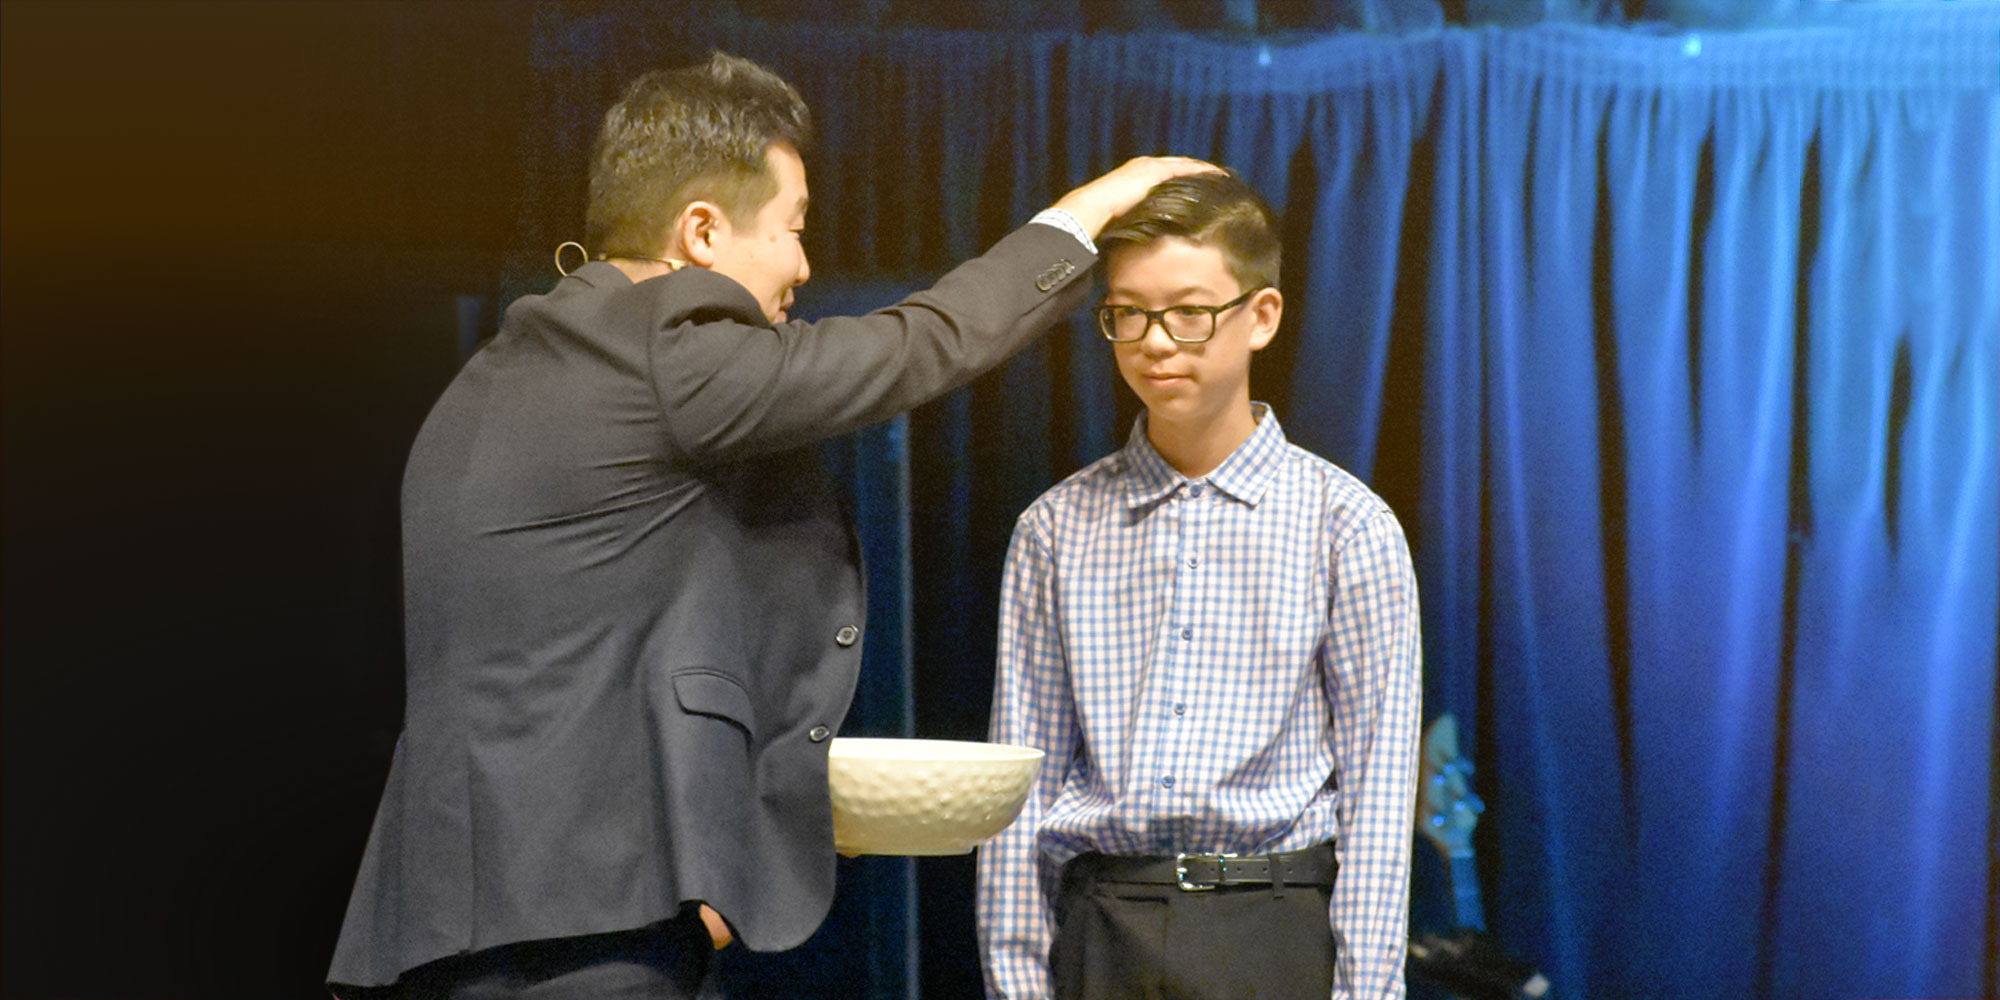 Pastor baptizing boy